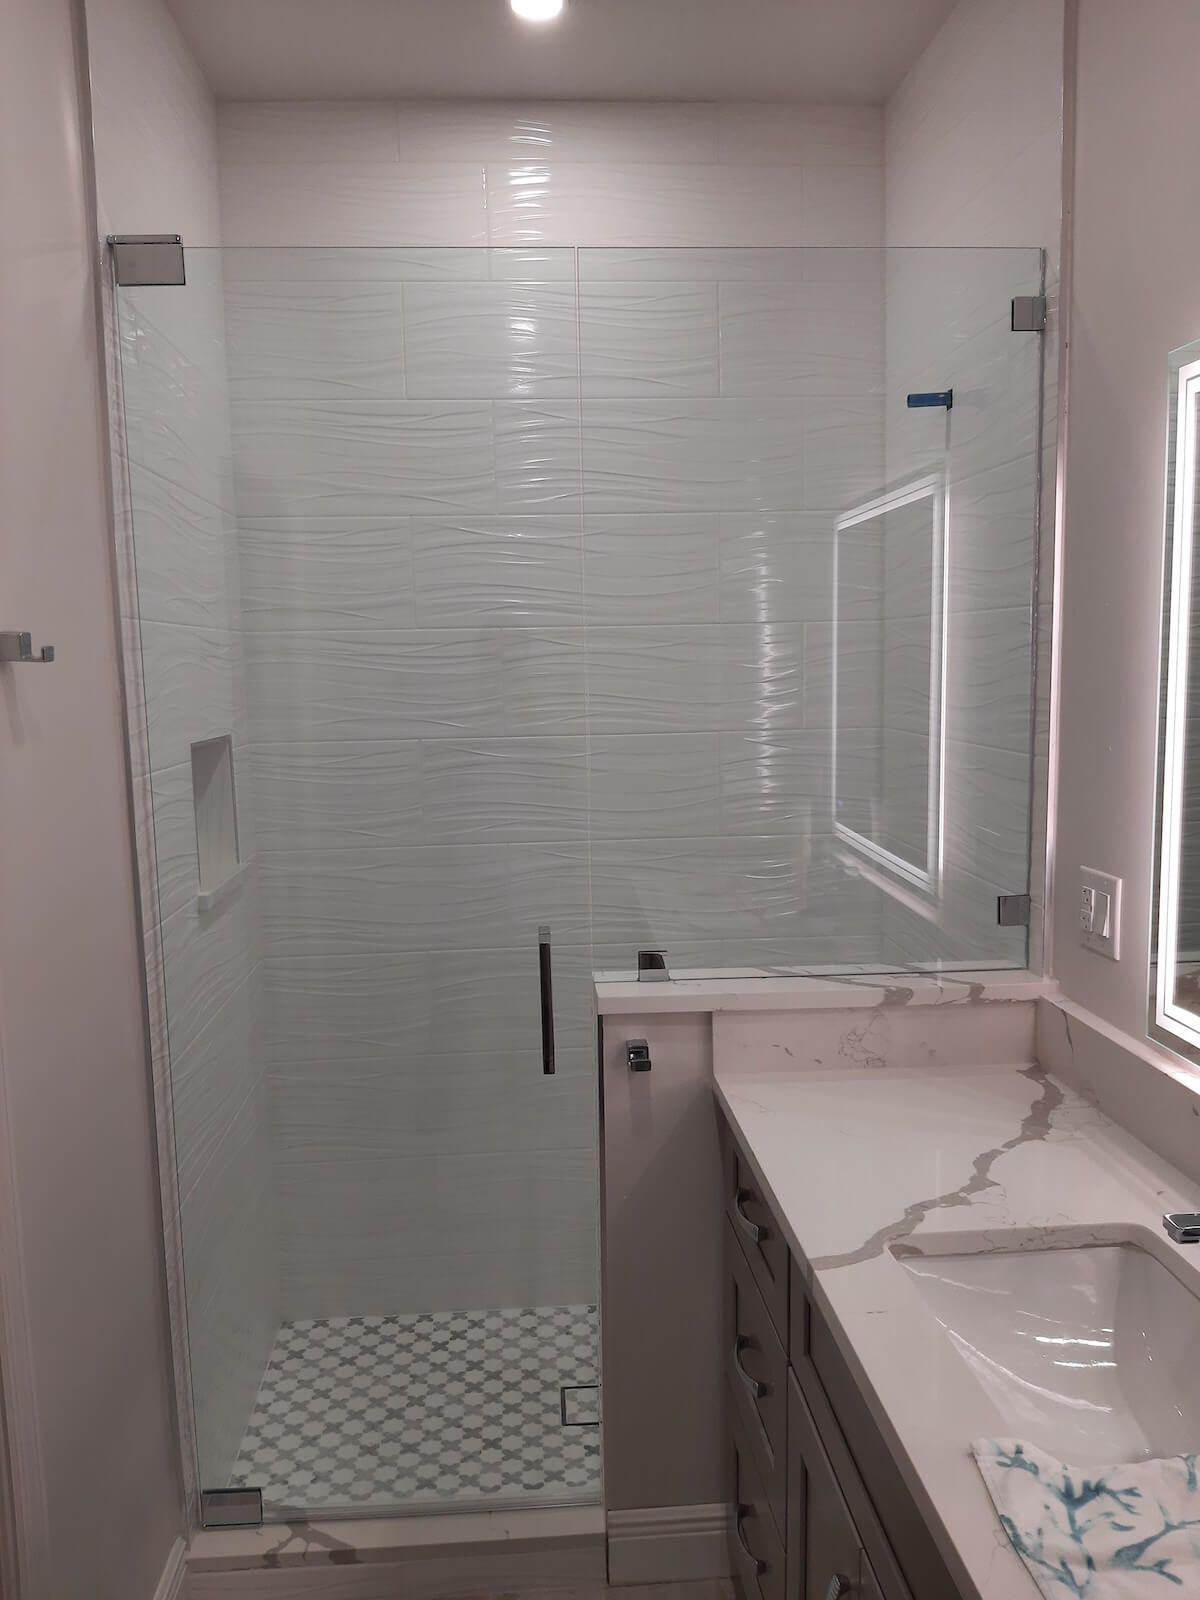 Pivot style glass shower door